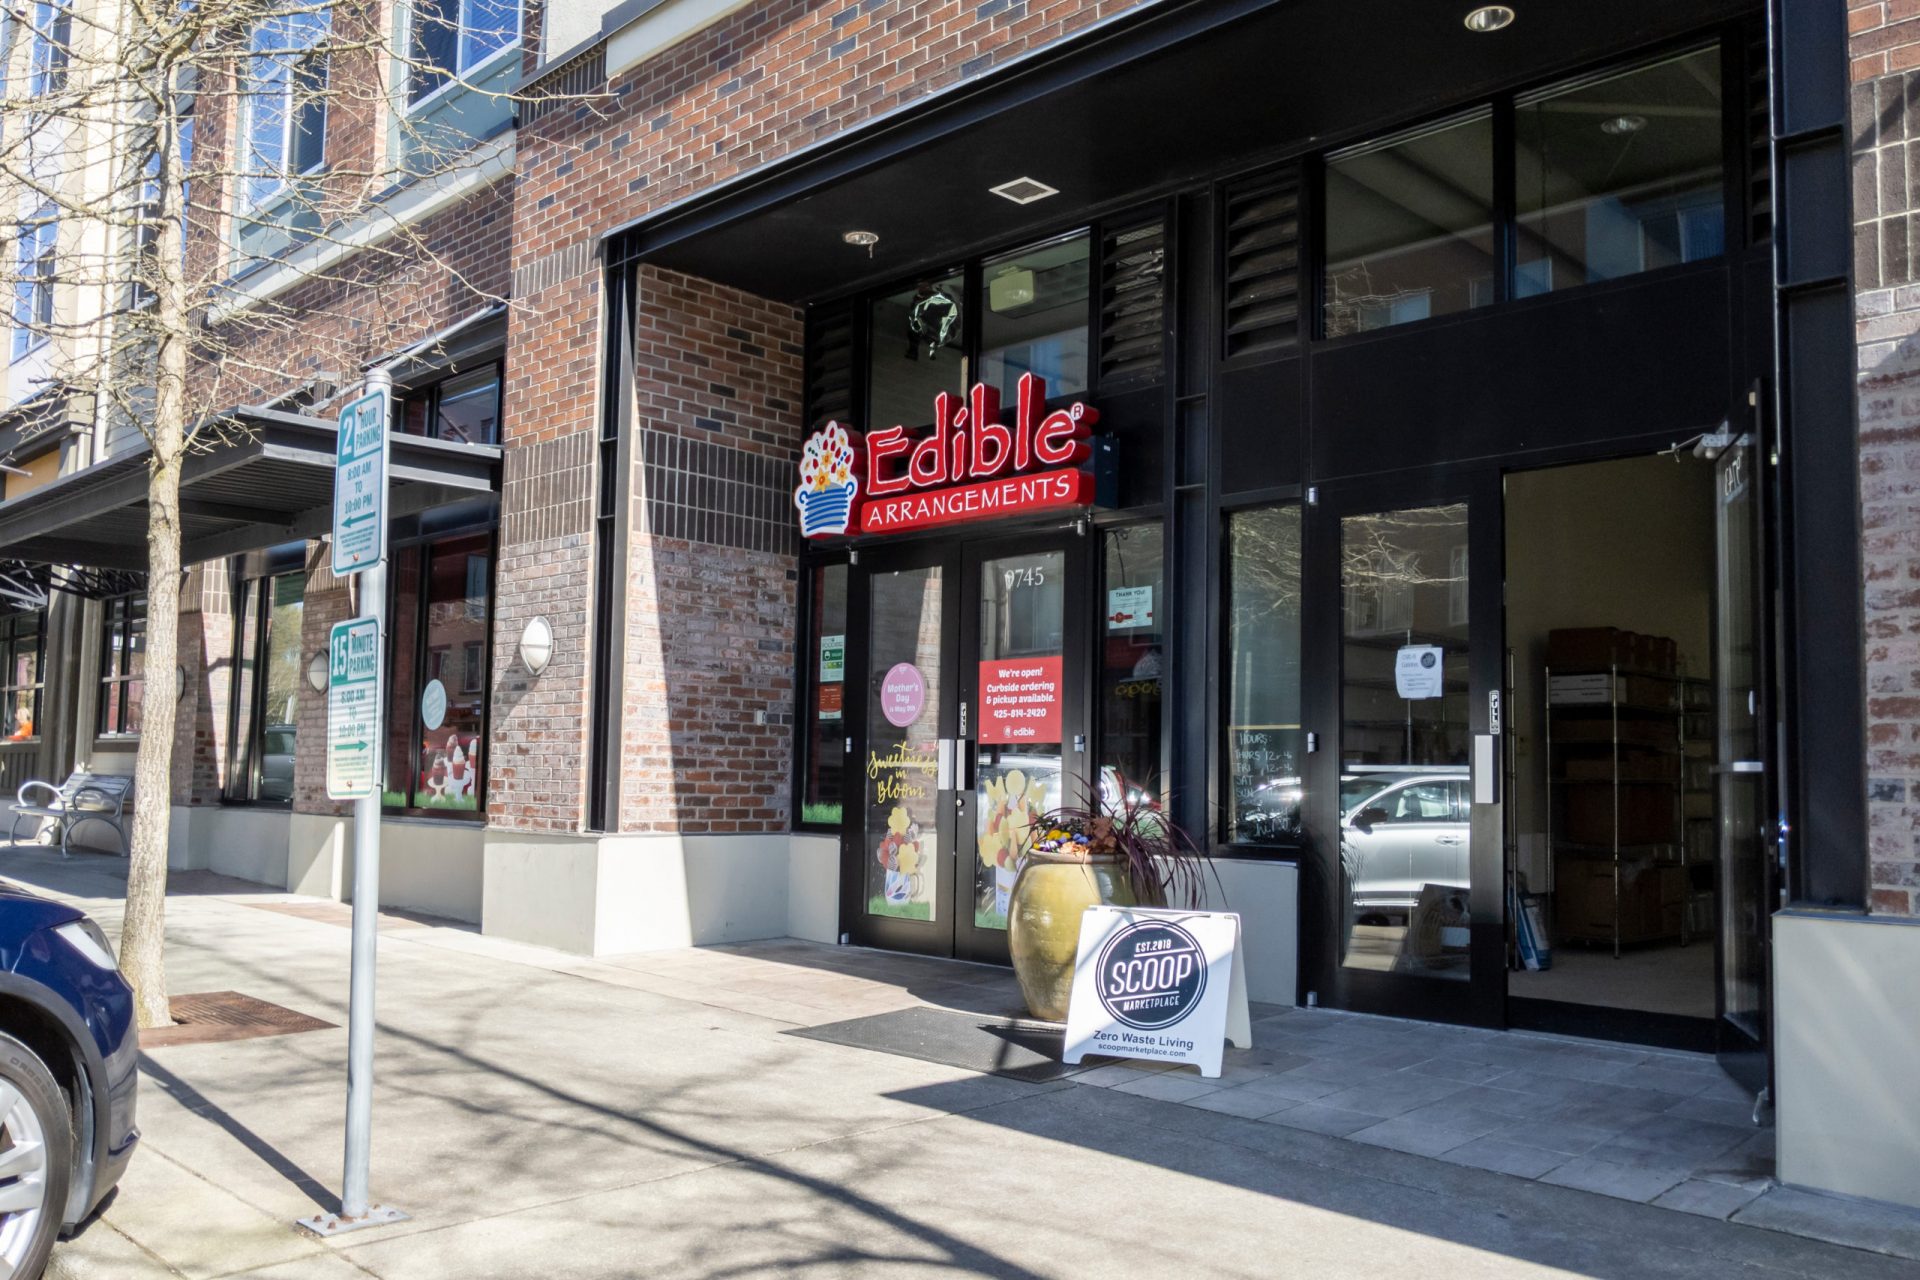 Kirkland, WA USA - circa April 2021: Street view of the exterior of an Edible Arrangements gift shop in a shopping center.